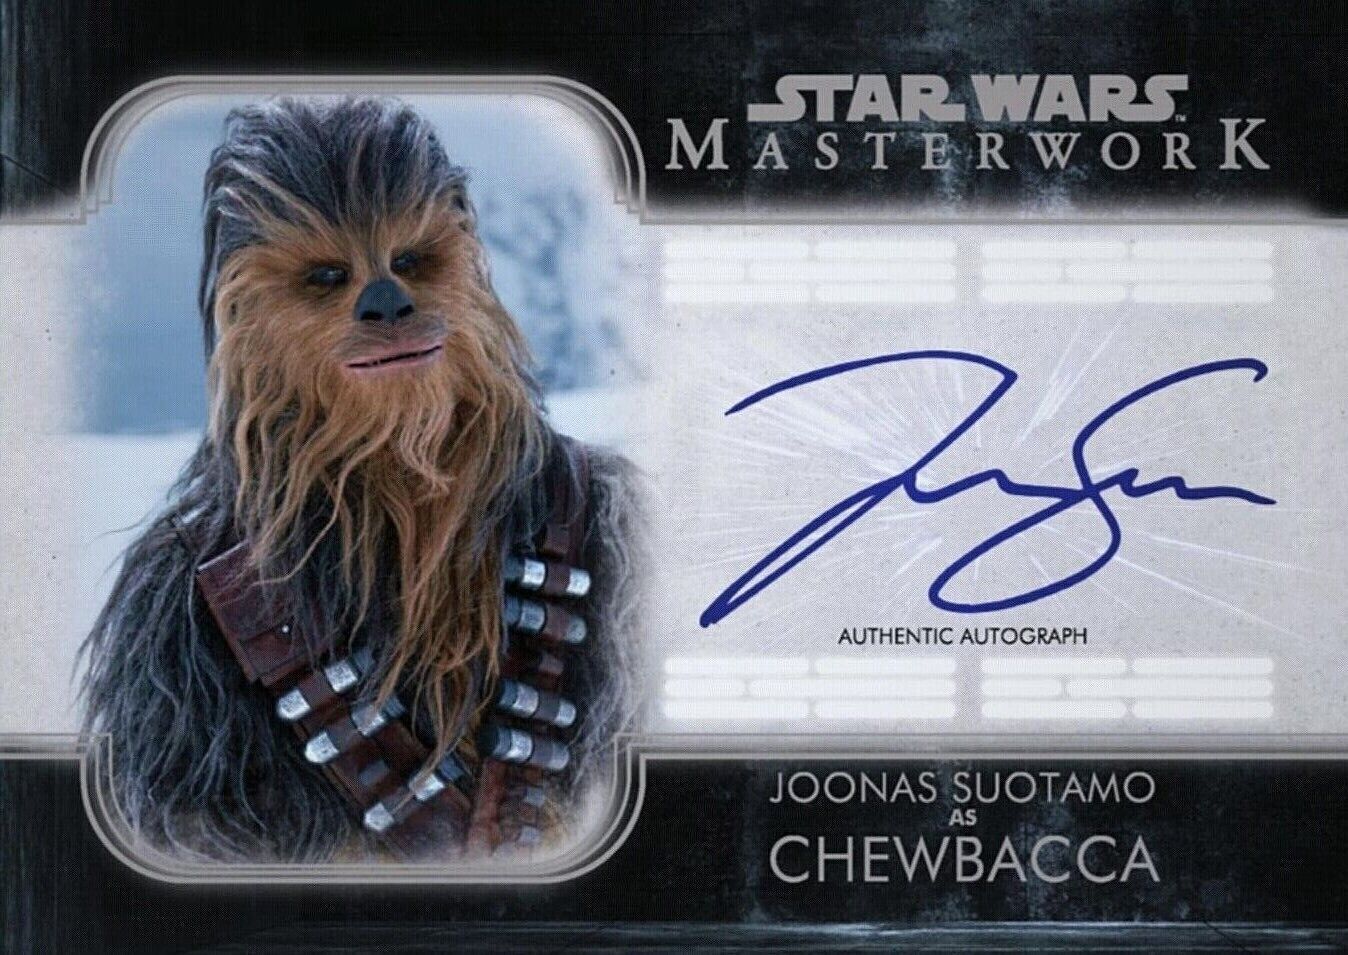 Topps Star Wars Card JOONAS SUOTAMO Authentic Auto as CHEWBACCA SIG Digital Card